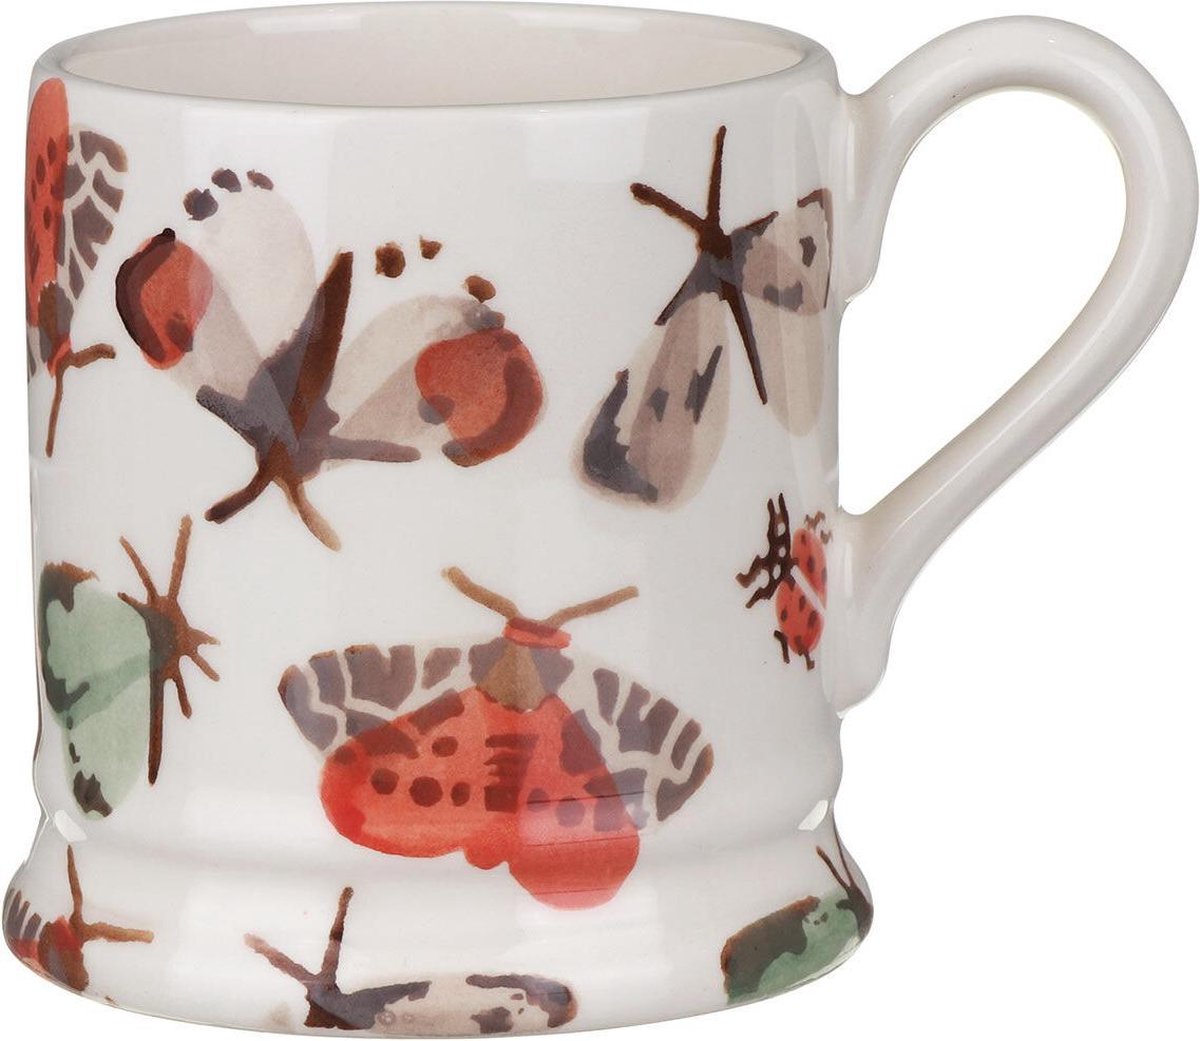 Emma Bridgewater Mug 1/2 Pint Insects Butterflies & Bugs